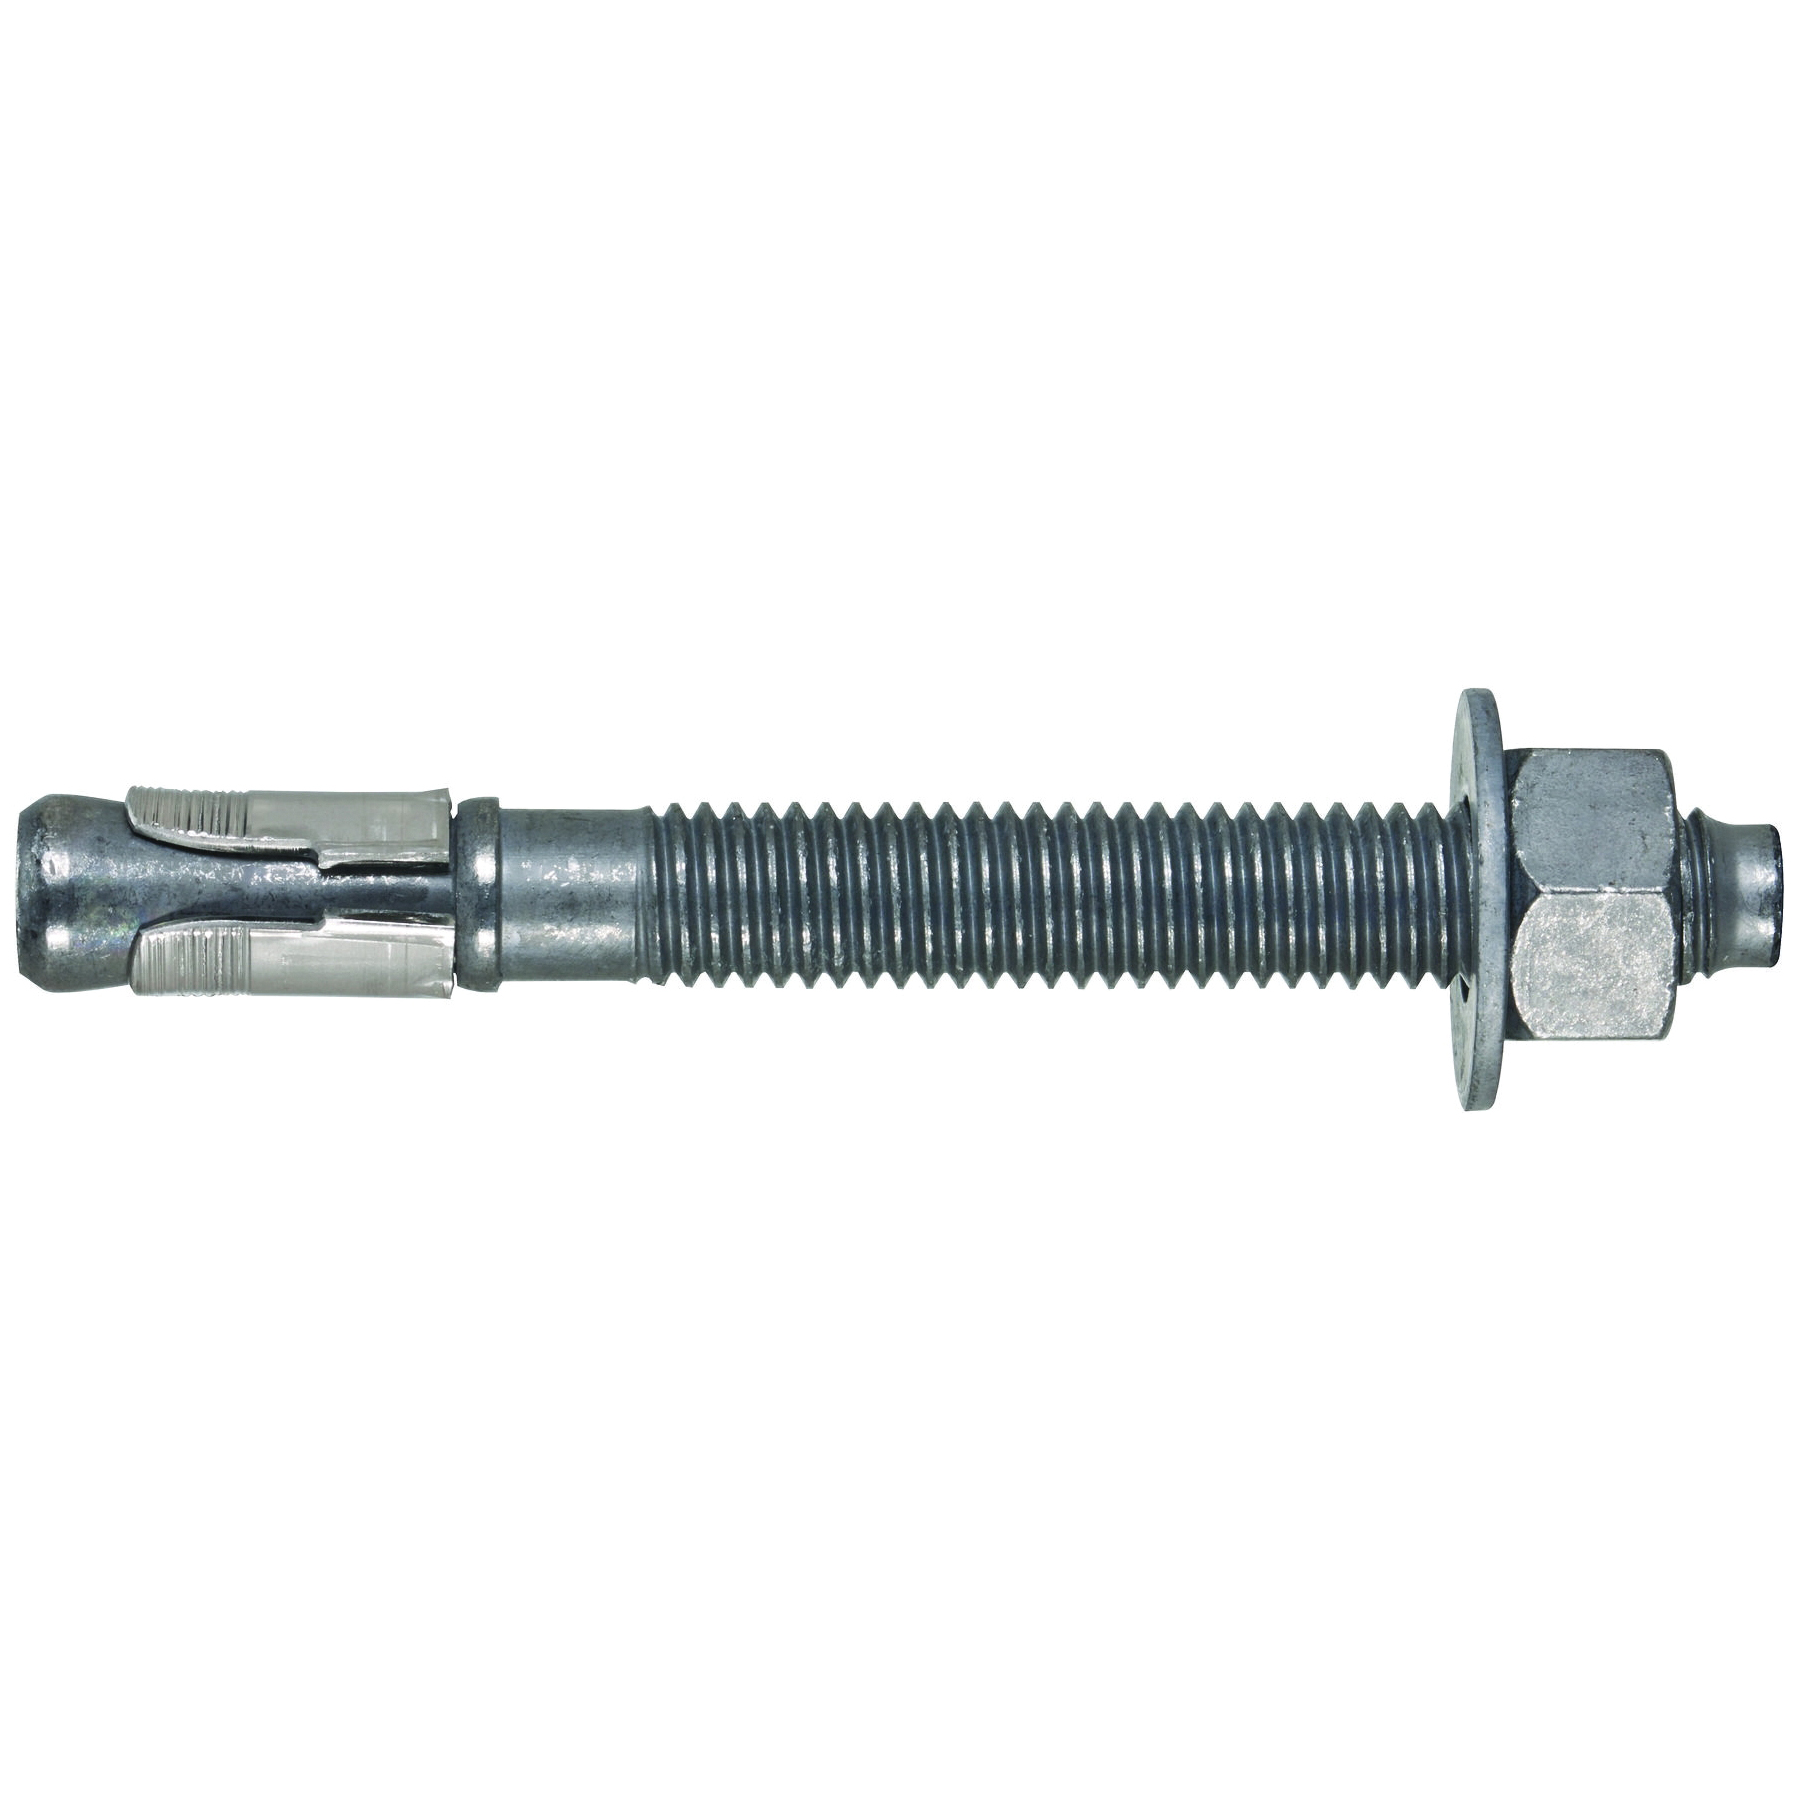 NEW HPS-1 6/5x30 Hammer Fixings of Hilti 260349/6 150Stk 